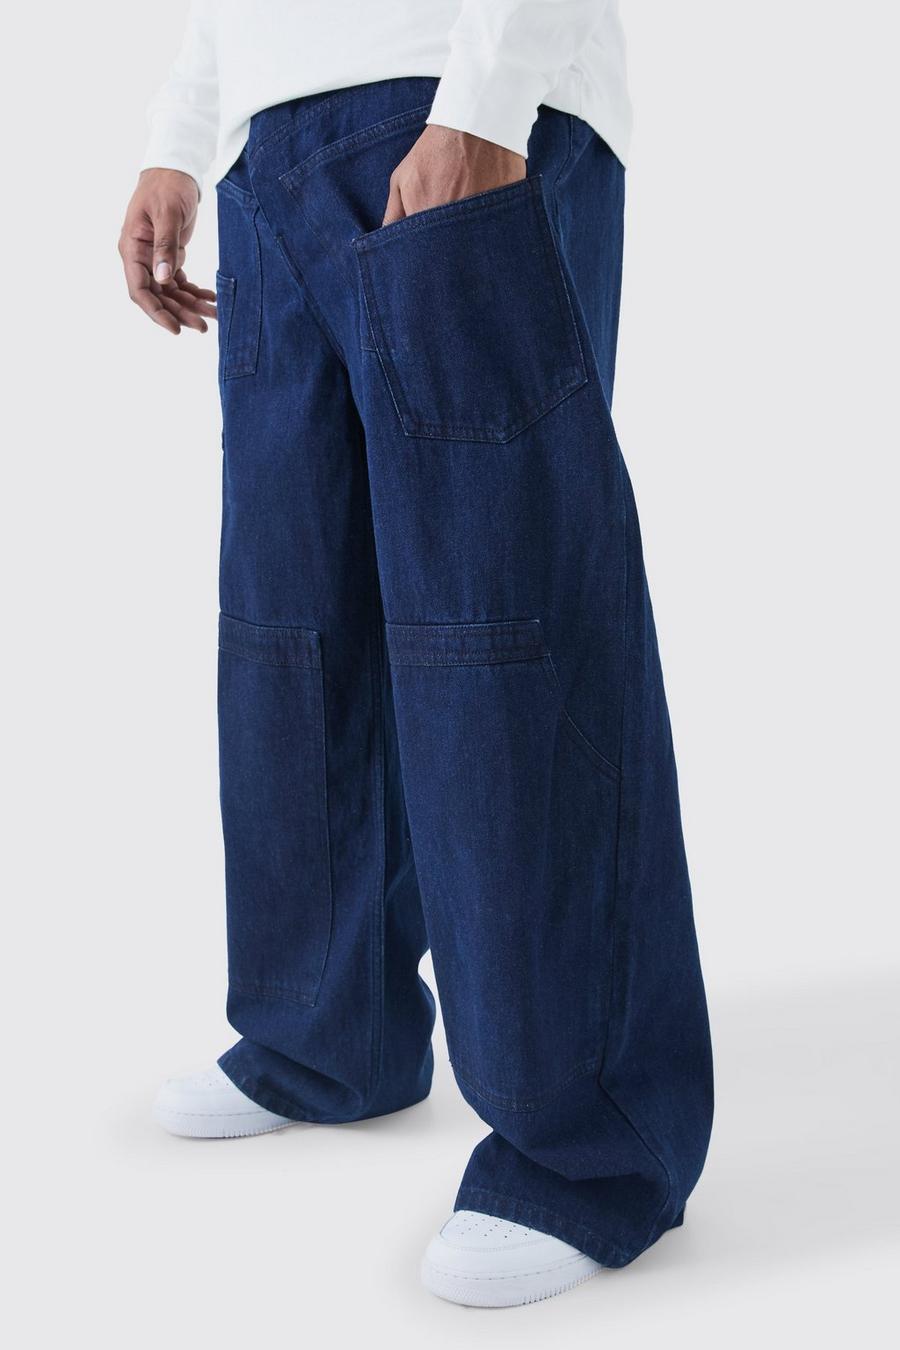 Jeans Plus Size extra comodi in denim rigido con tasche Carpenter, Indigo